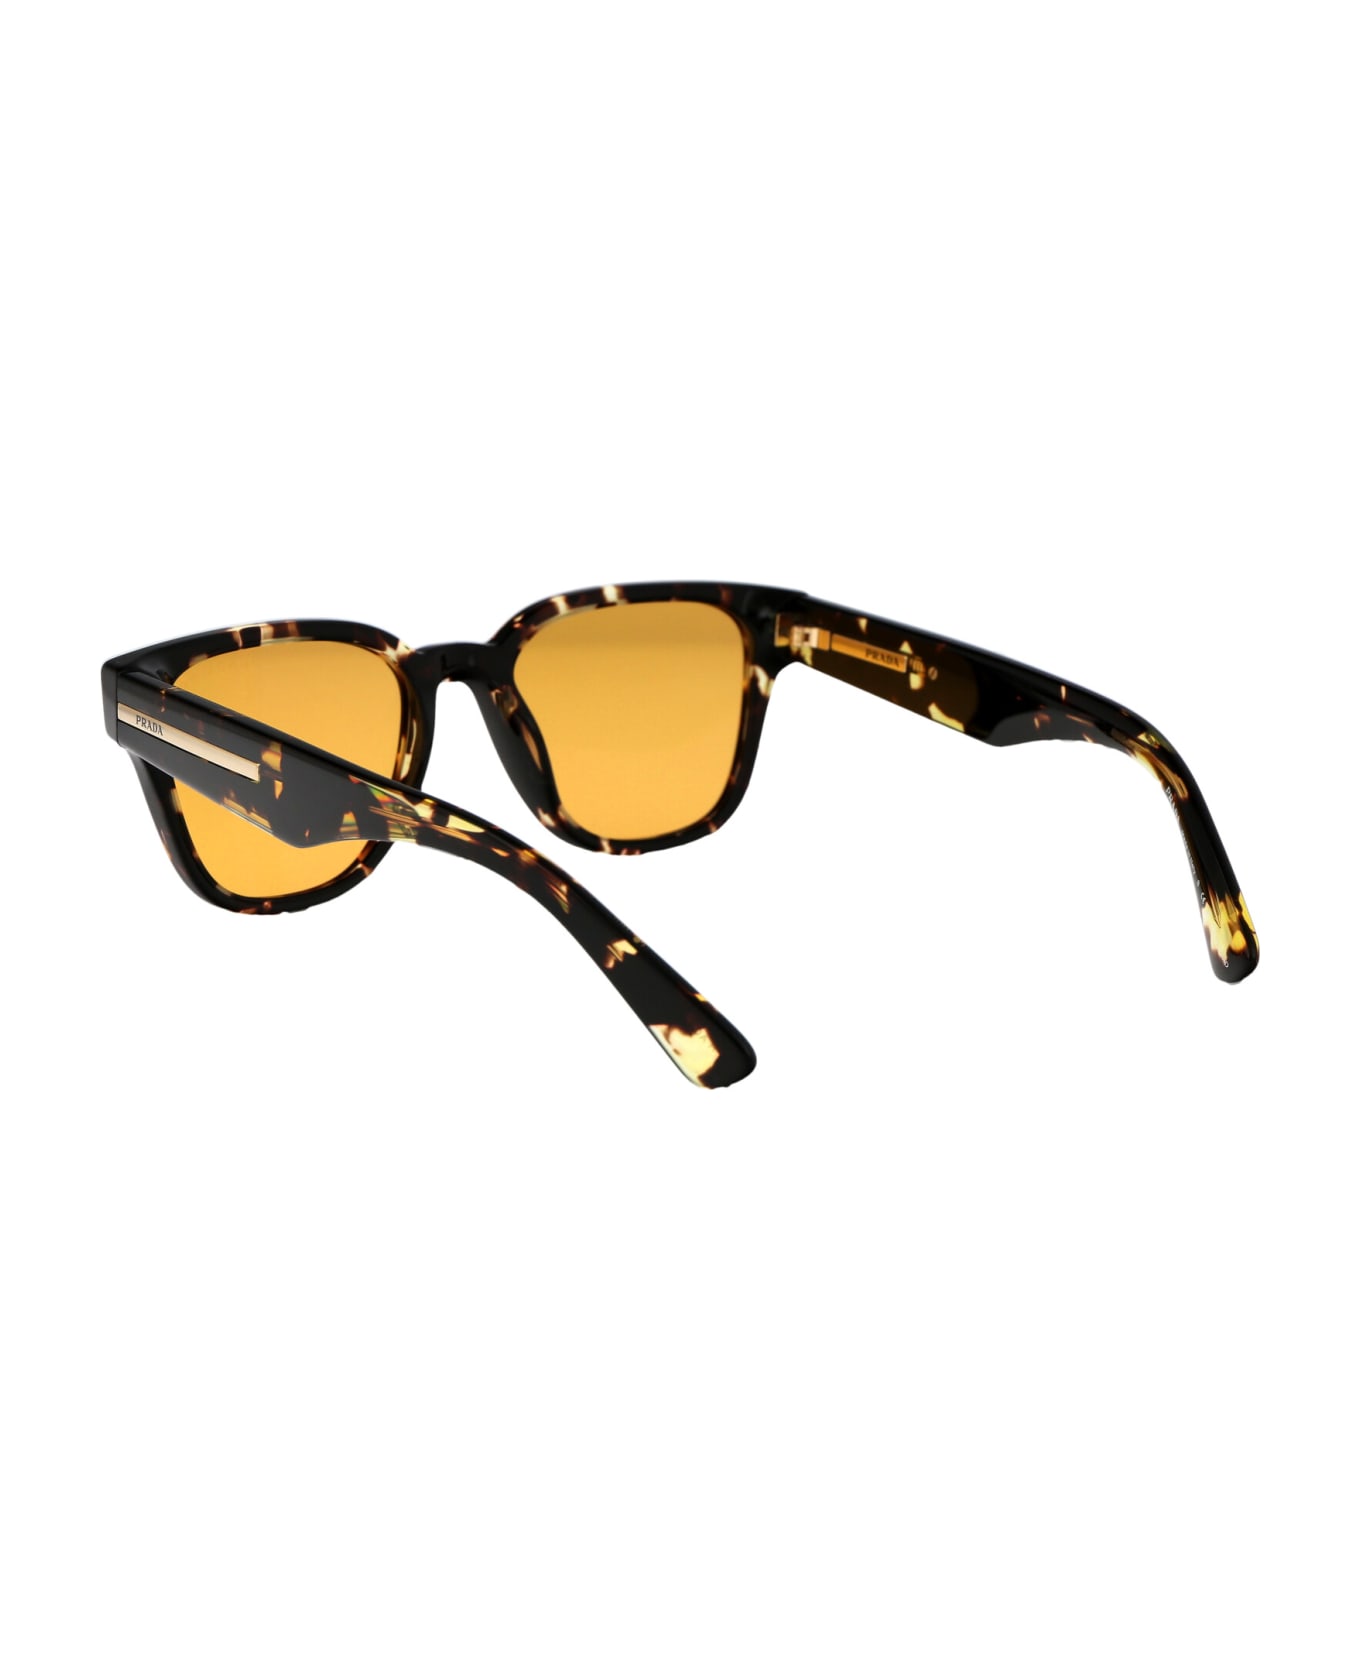 Prada Eyewear 0pr A04s Sunglasses - 16O20C Havana Black/Yellow